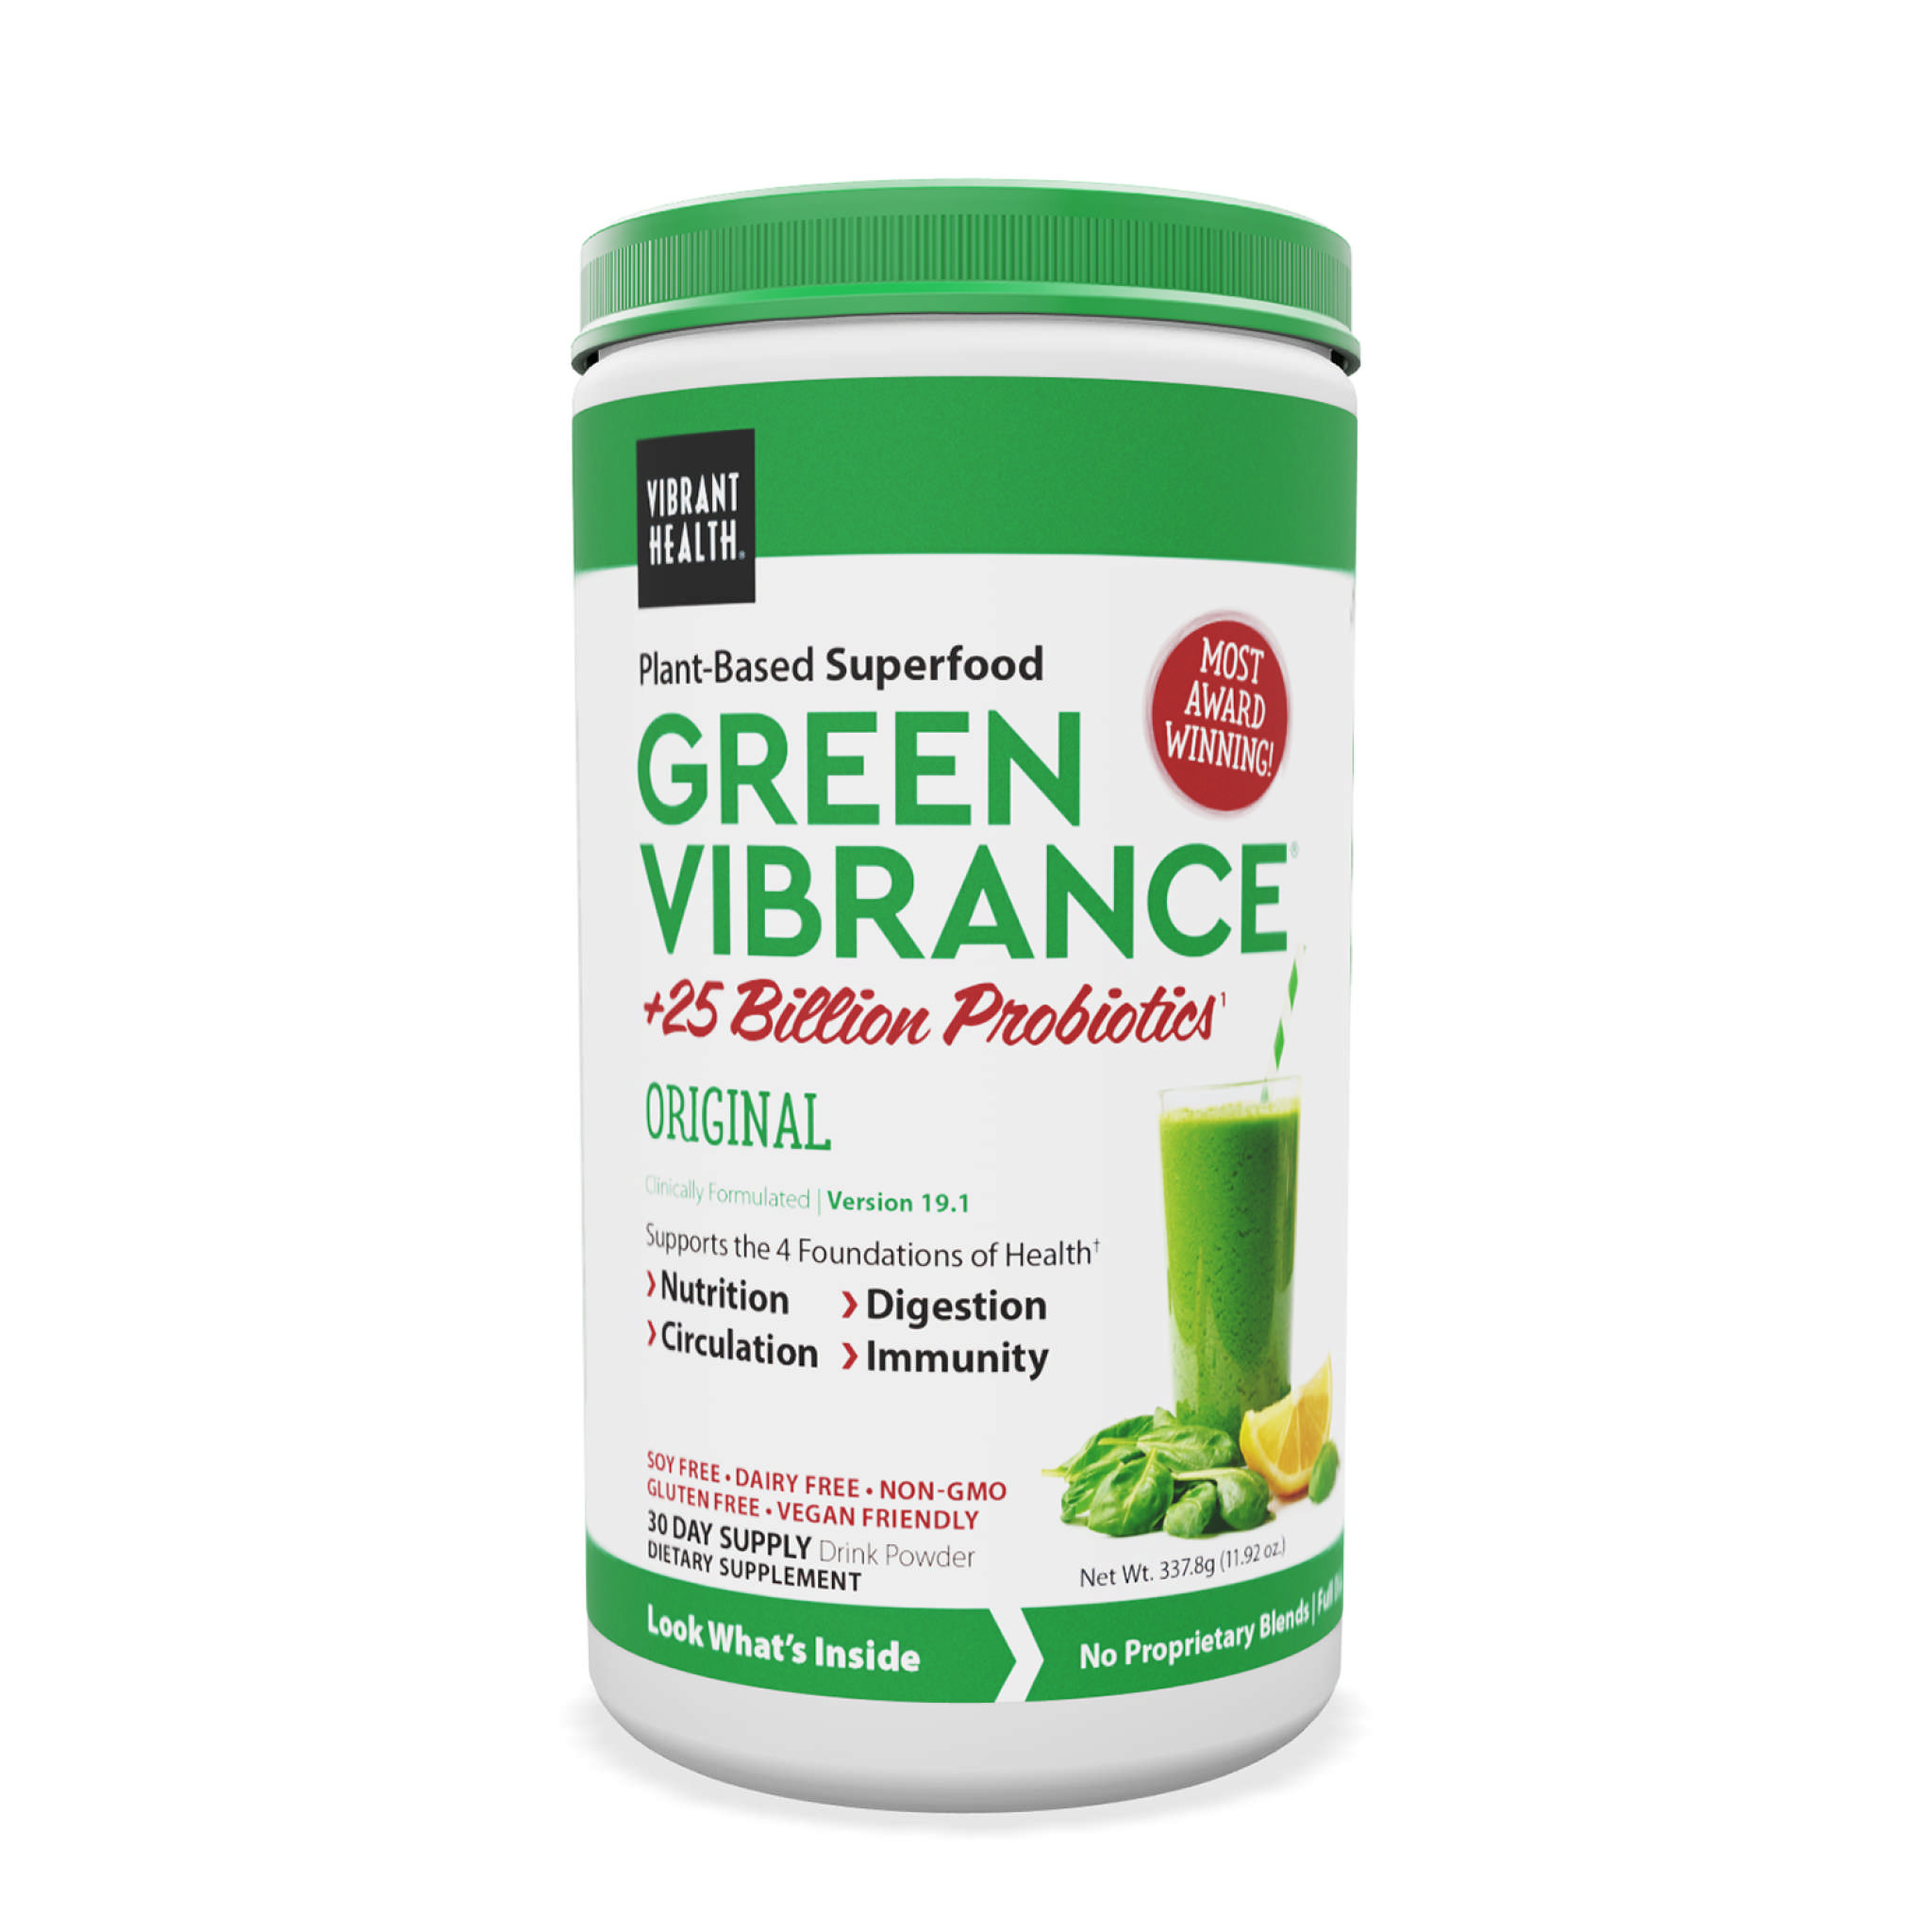 Vibrant Health - Green Vibrance powder